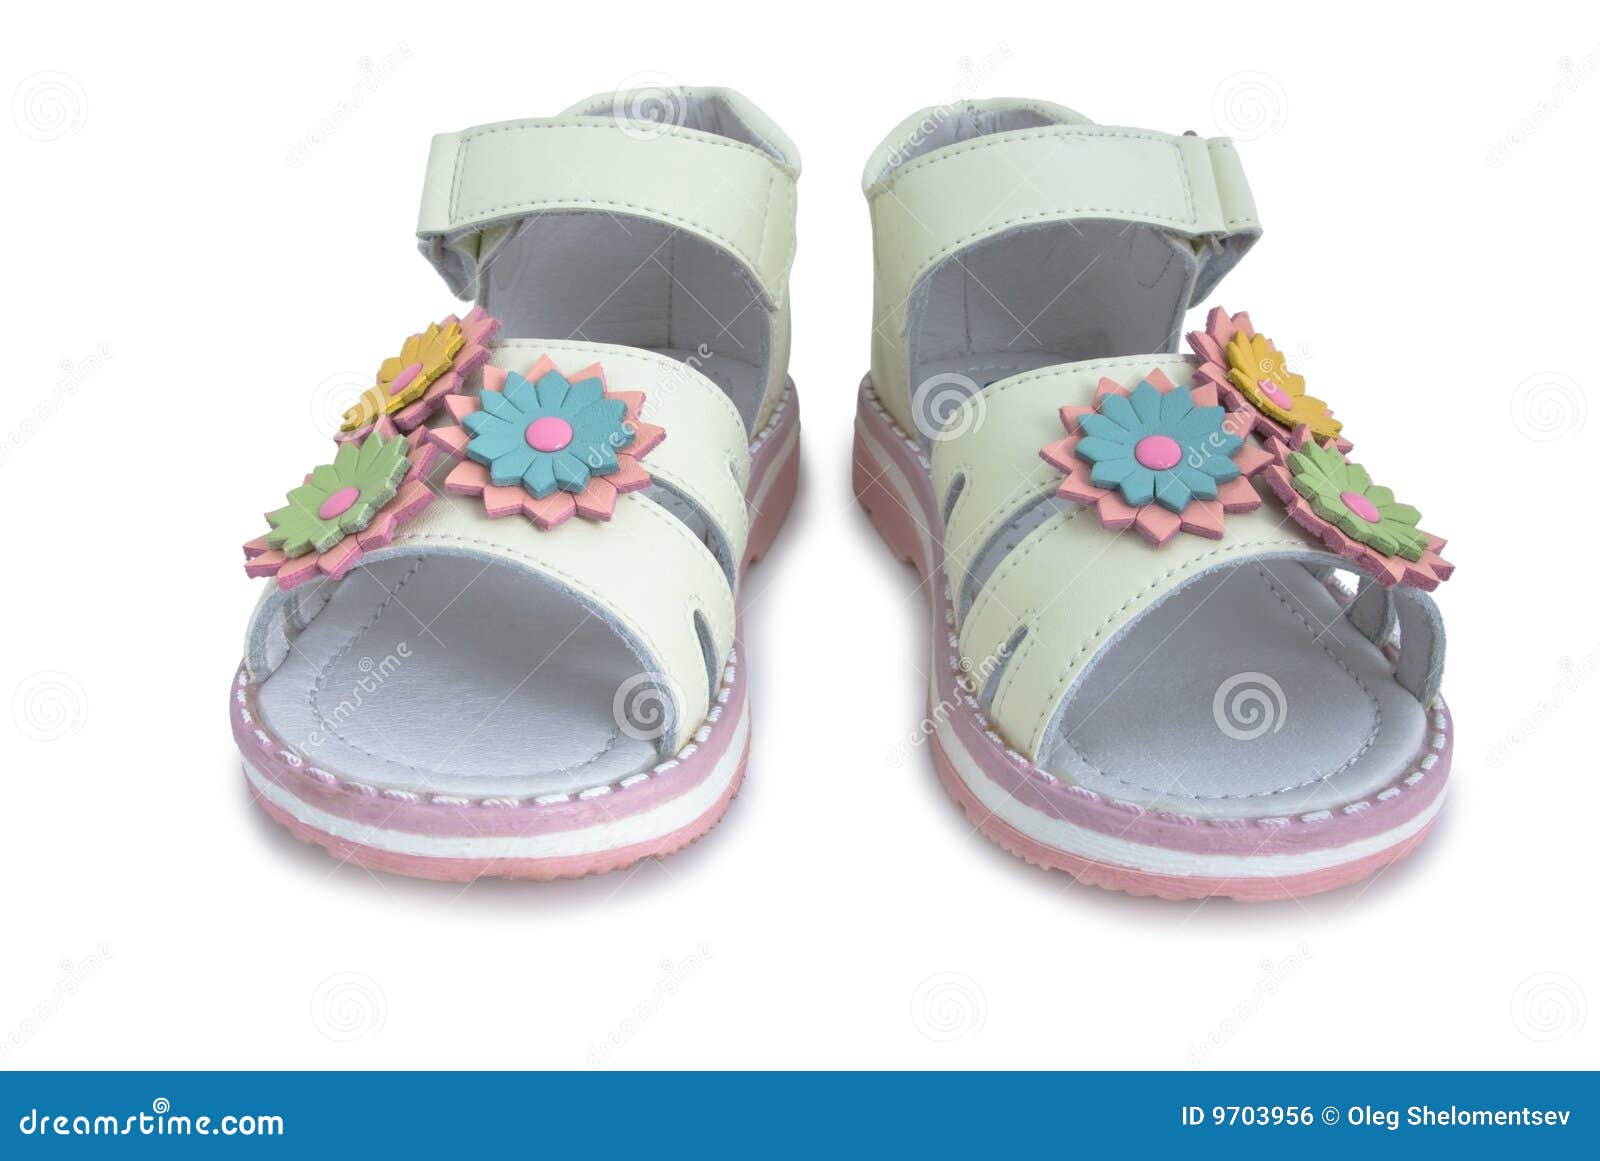 Beige Light Leather Kids Sandals. Royalty Free Stock Image - Image ...